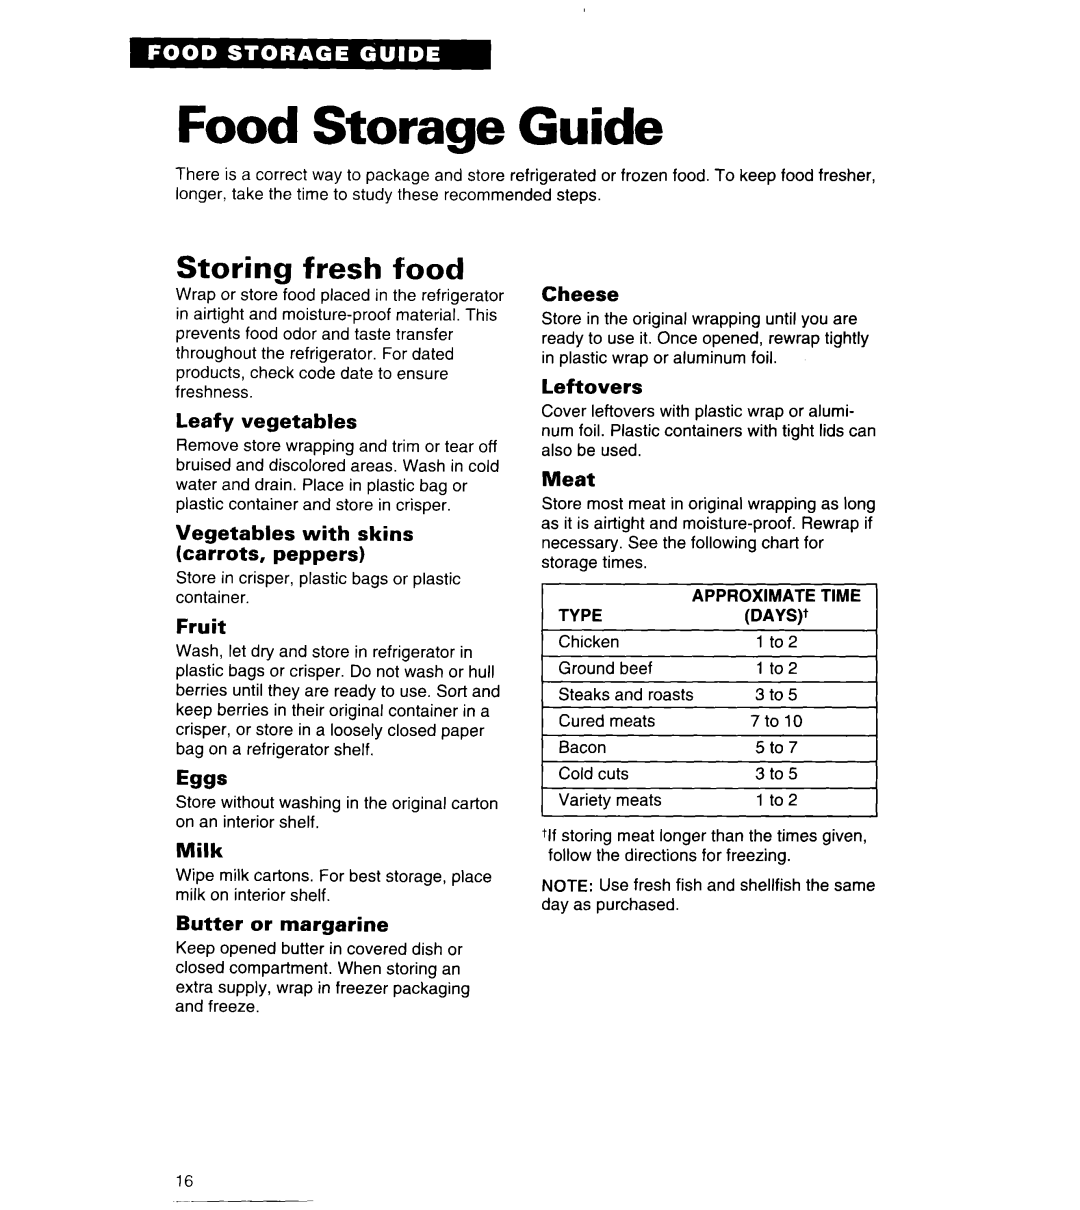 Whirlpool 4ET14GK Food Storage Guide, Storing fresh food, Leafy vegetables, Vegetables with skins carrots, peppers, Fruit 